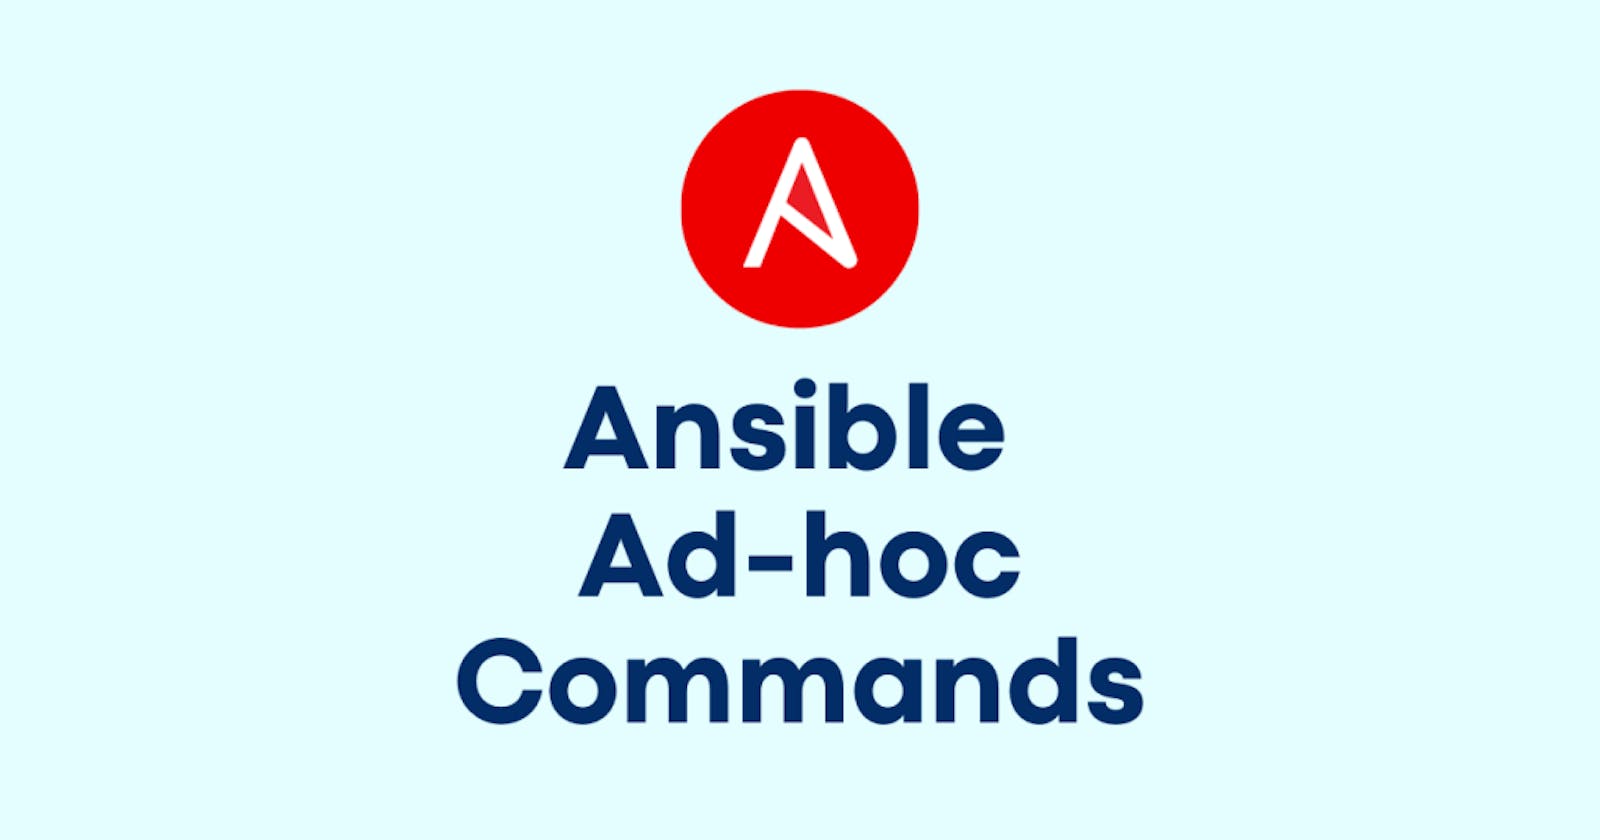 Ansible Basics and Ad-hoc Commands